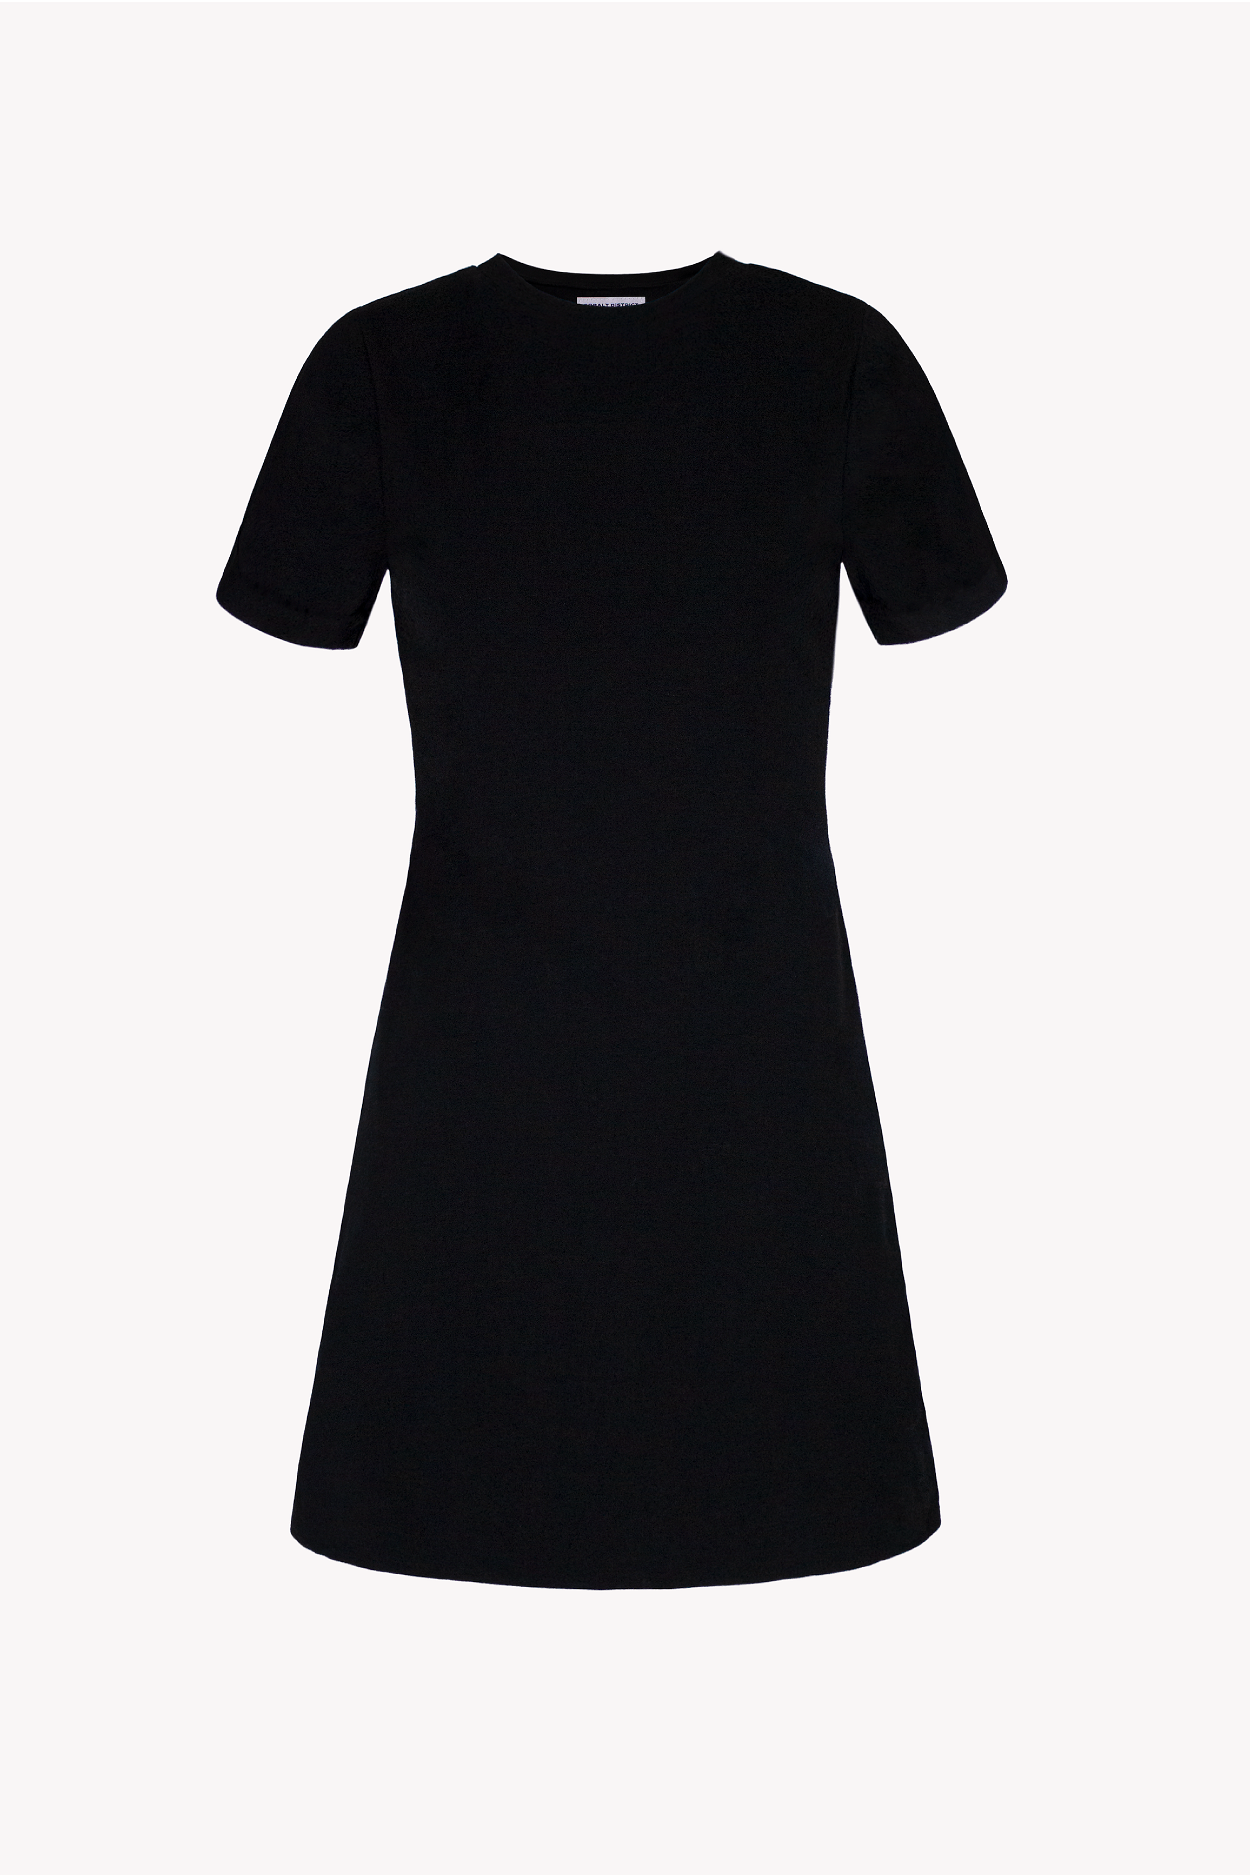 Black BCI Cotton T-shirt Dress